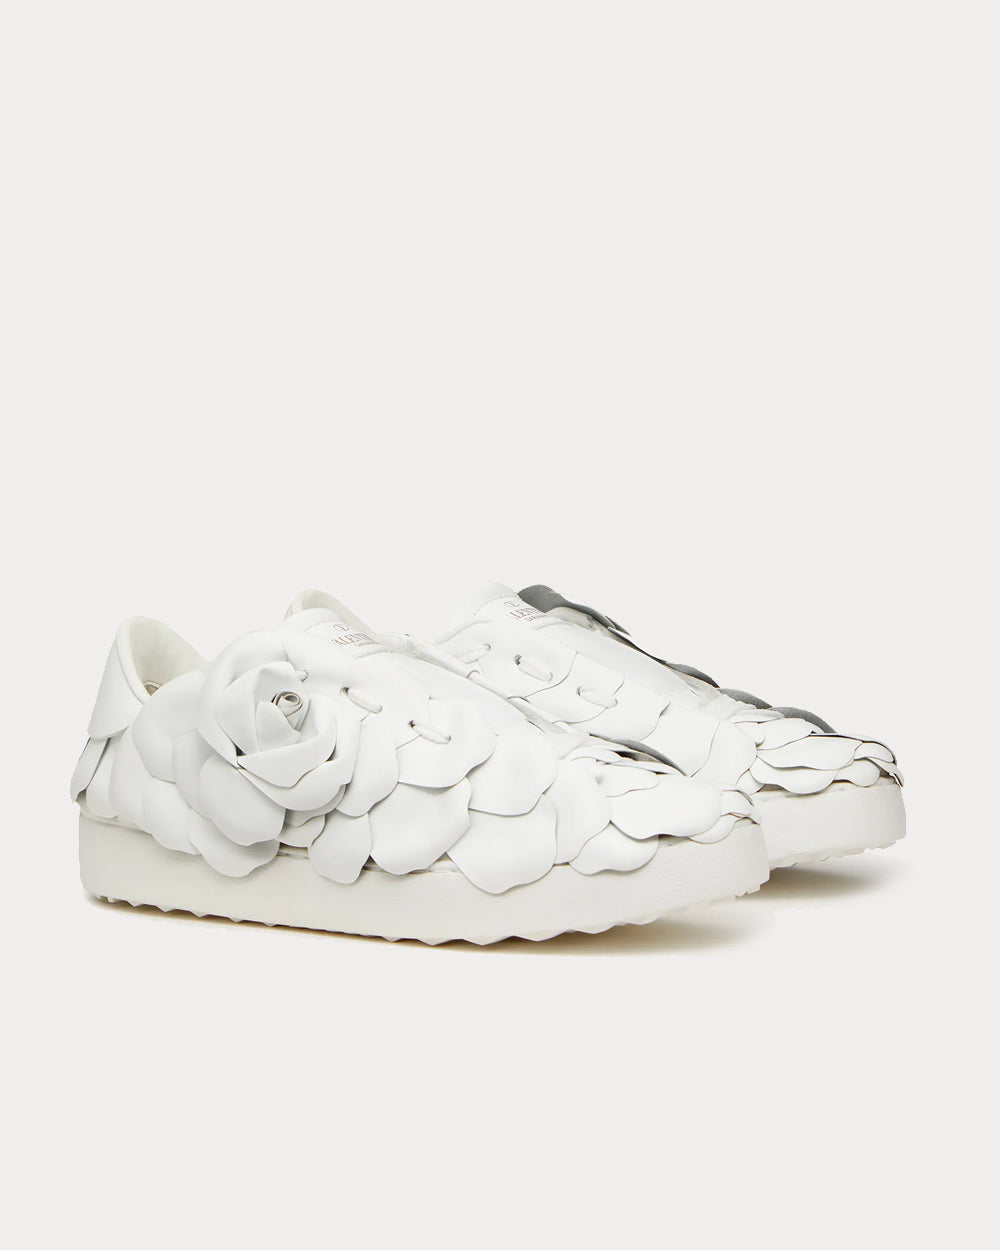 Valentino - Garavani Atelier Petal Effect White Low Top Sneakers